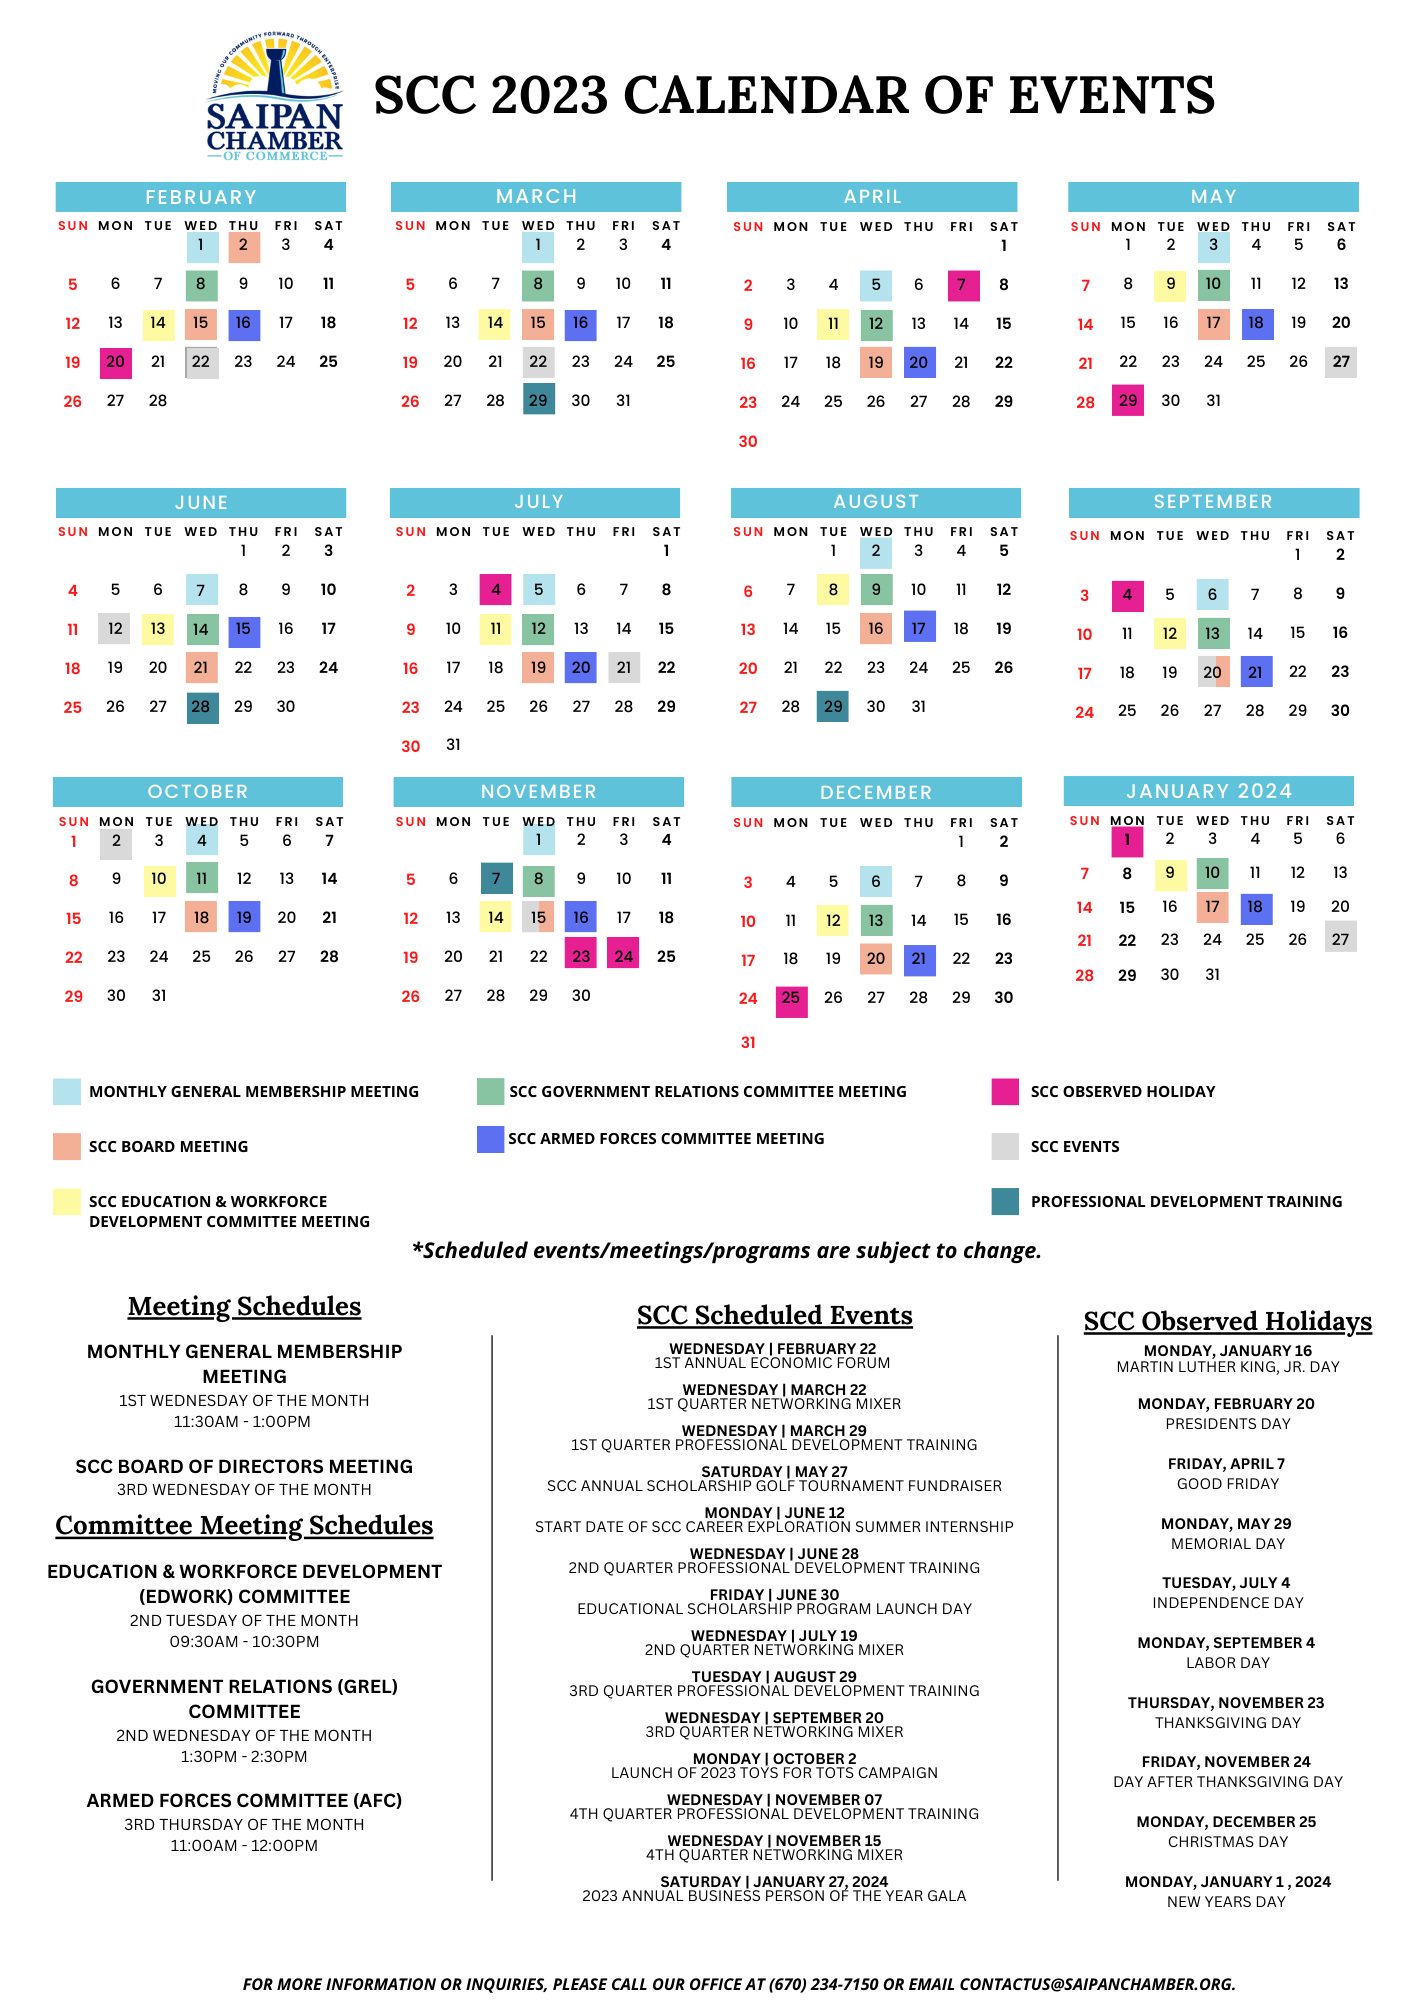 SCC Calendar of Events - 2023